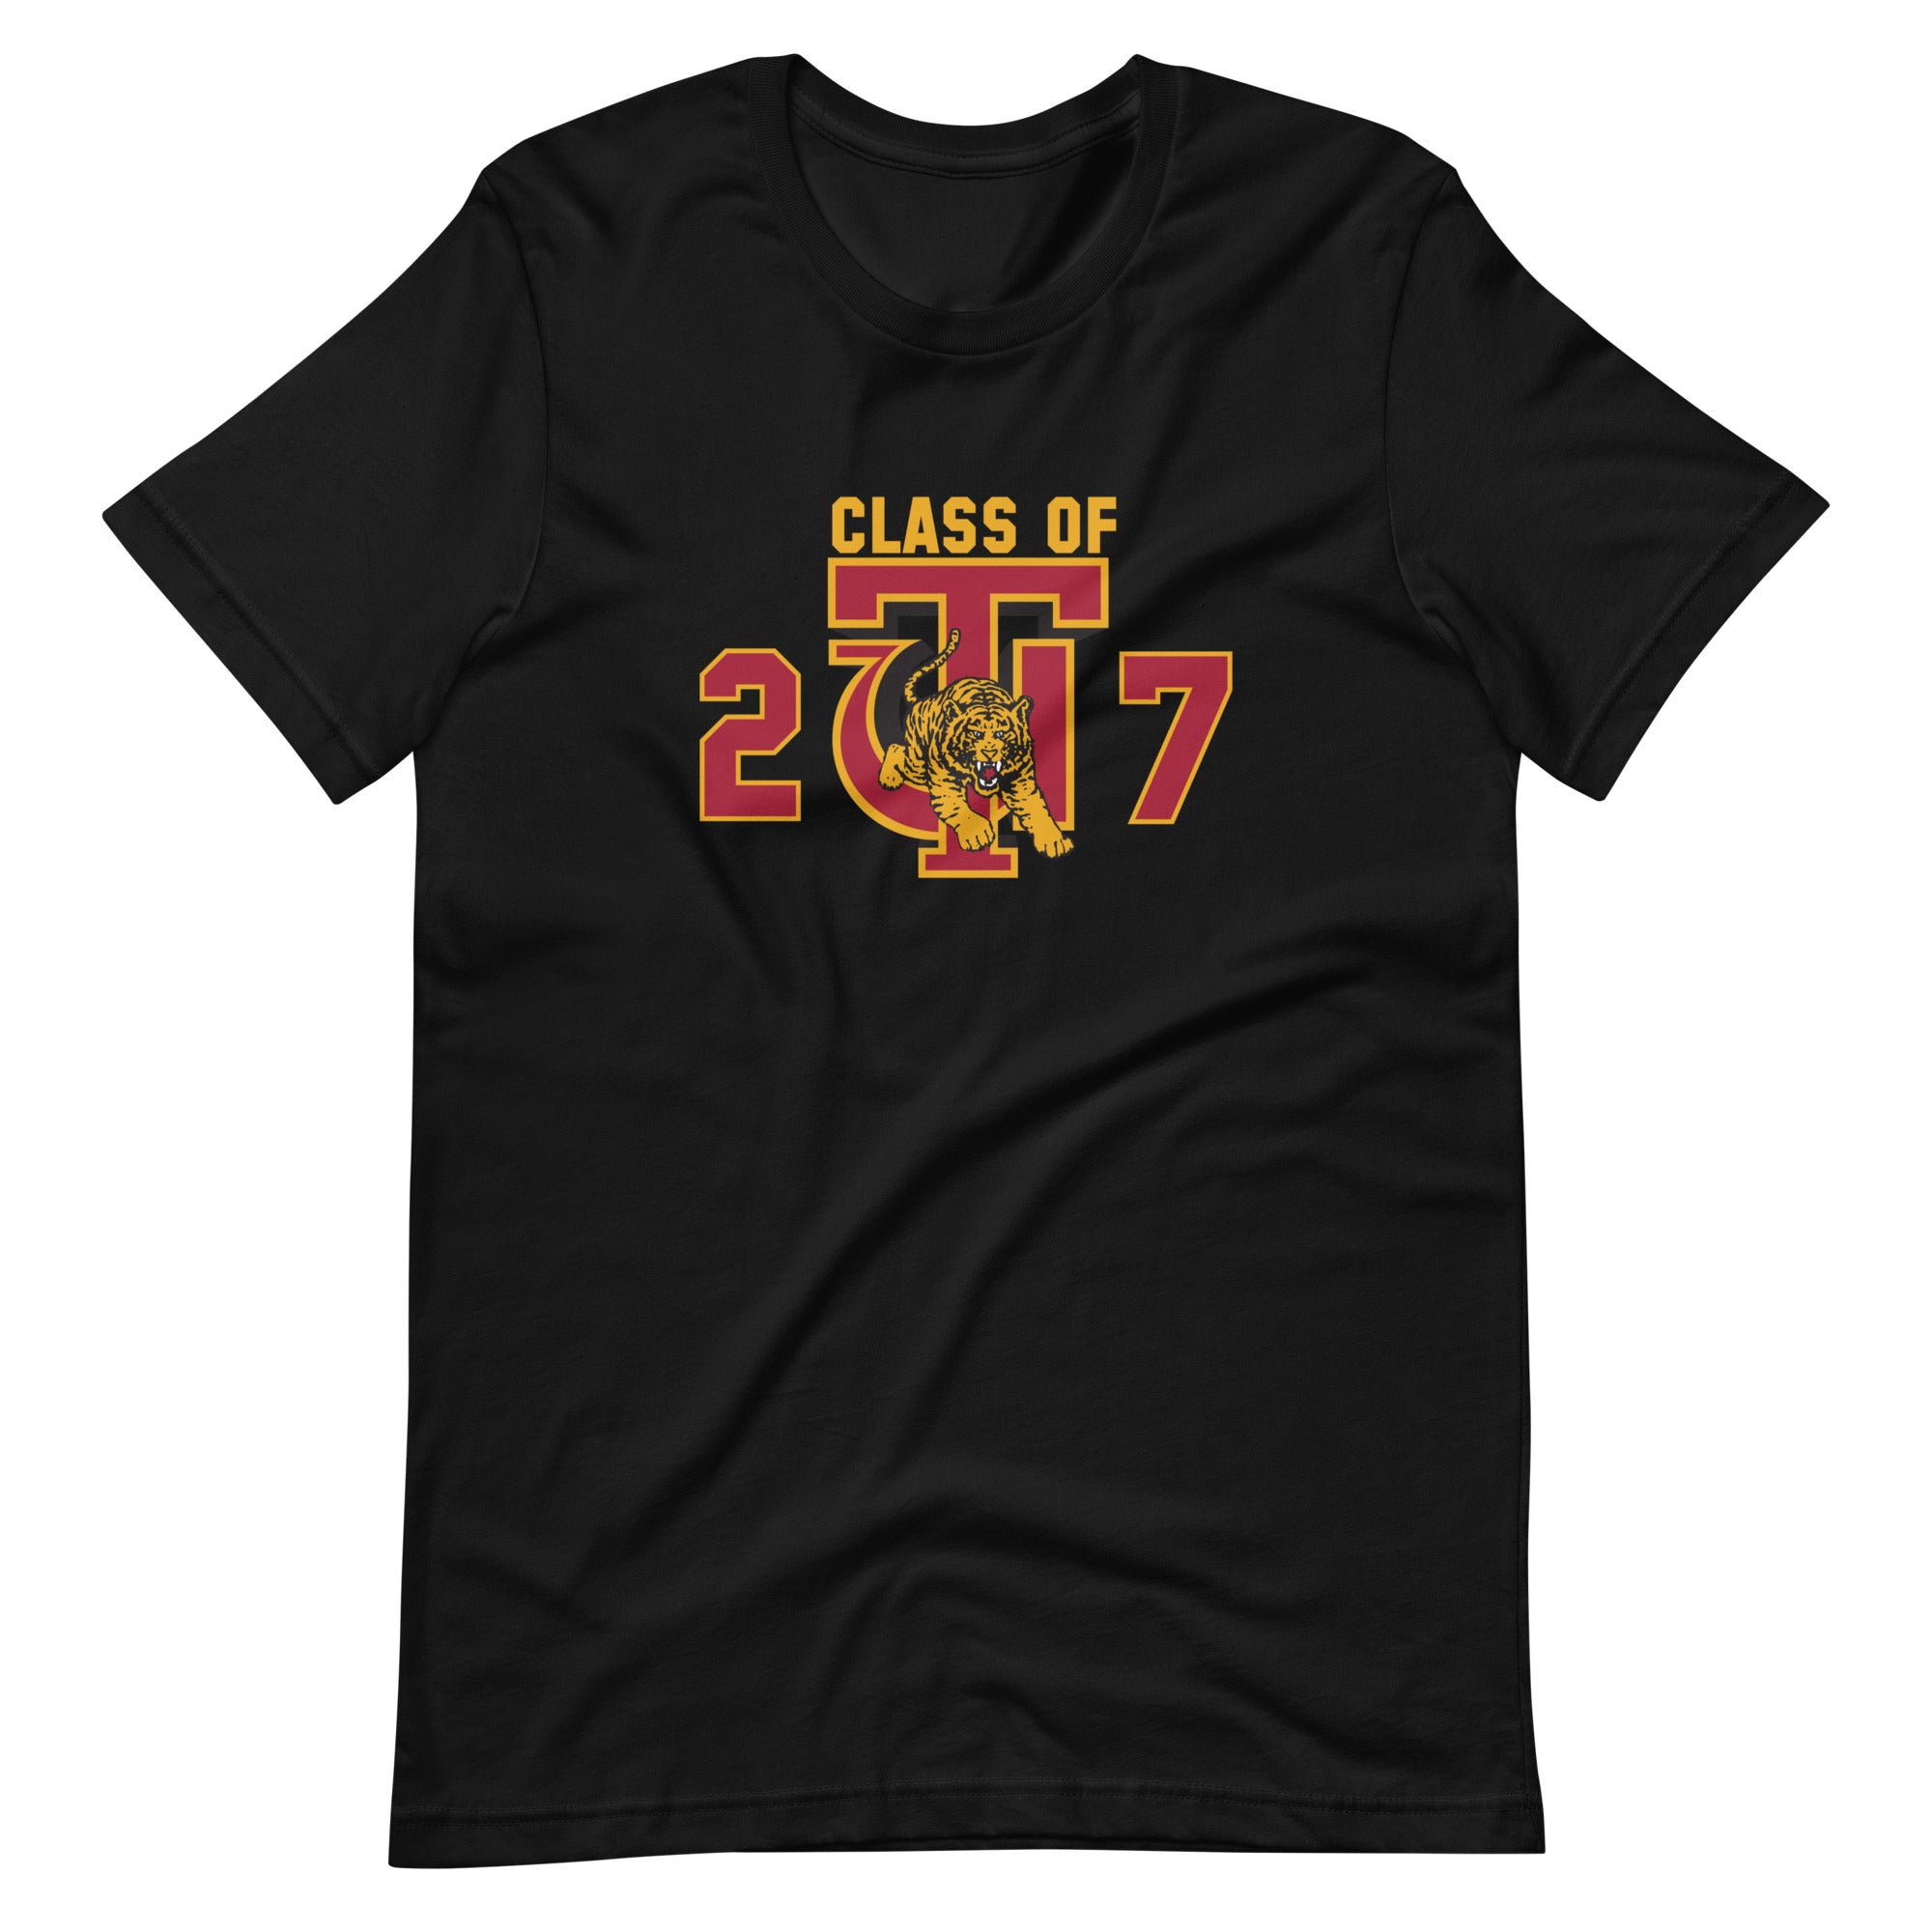 Tuskegee University Class of 2027 Tee